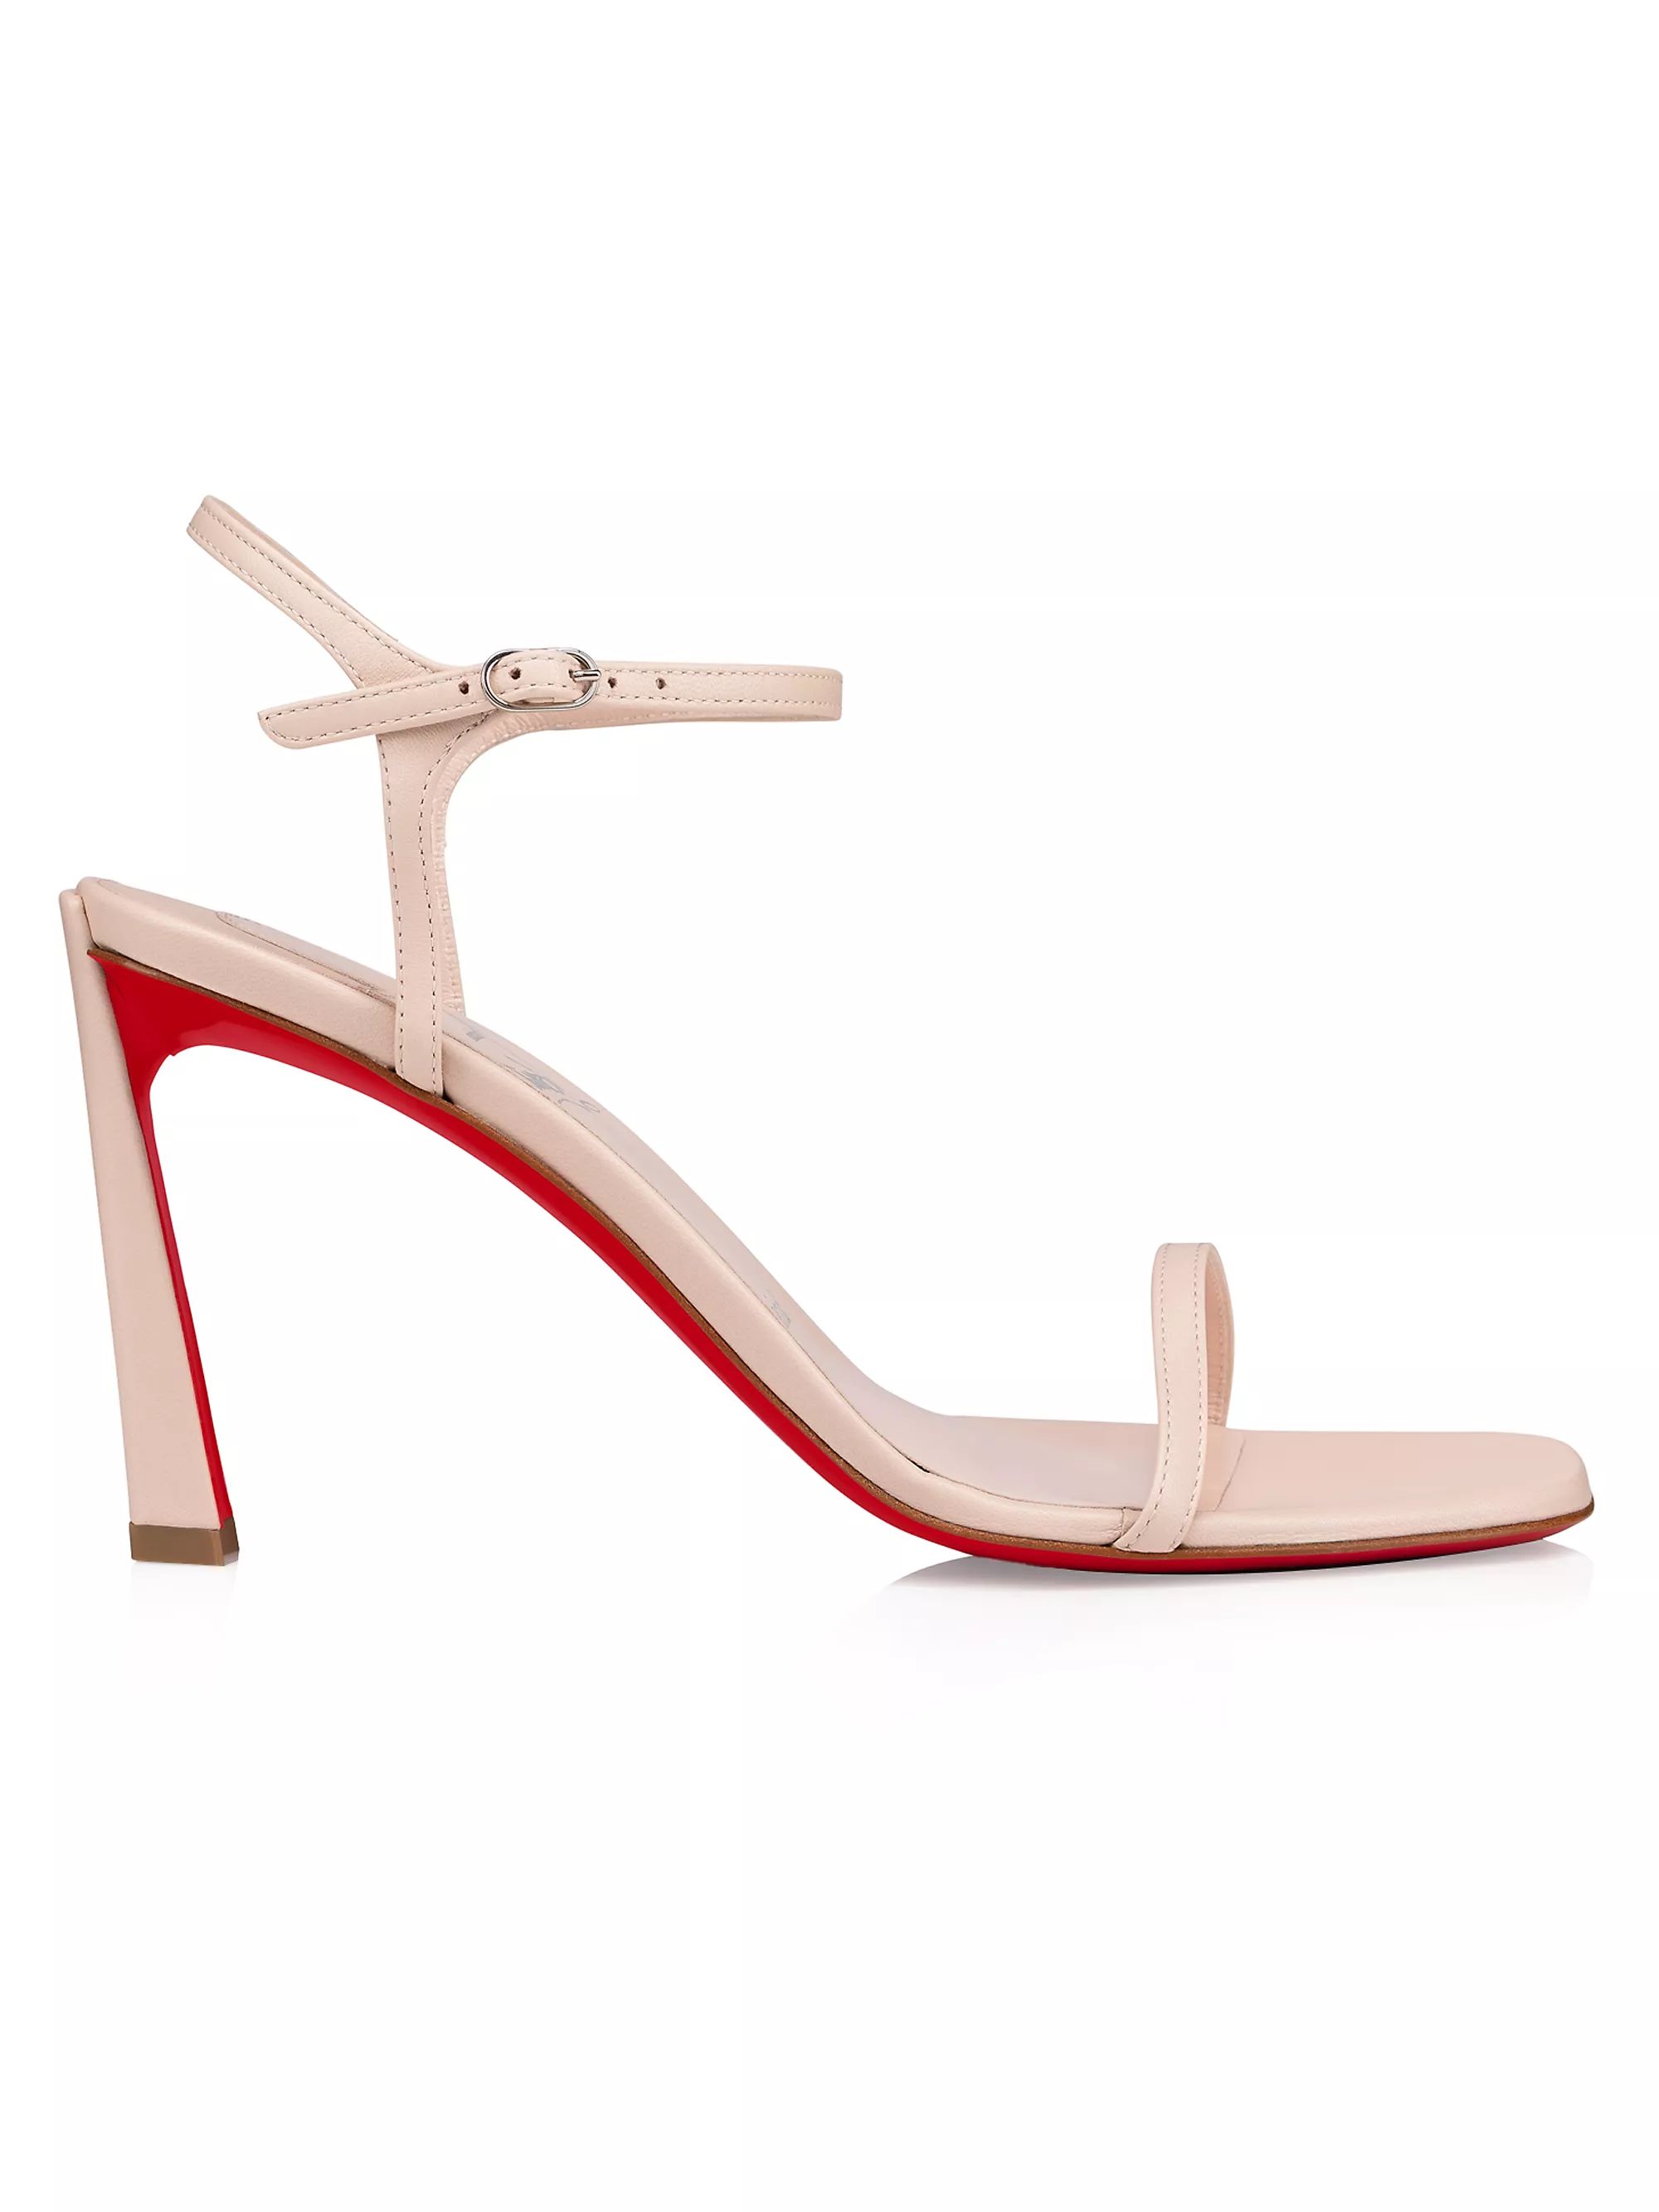 Shop Christian Louboutin Condora Leather High-Heel Sandals | Saks Fifth Avenue | Saks Fifth Avenue